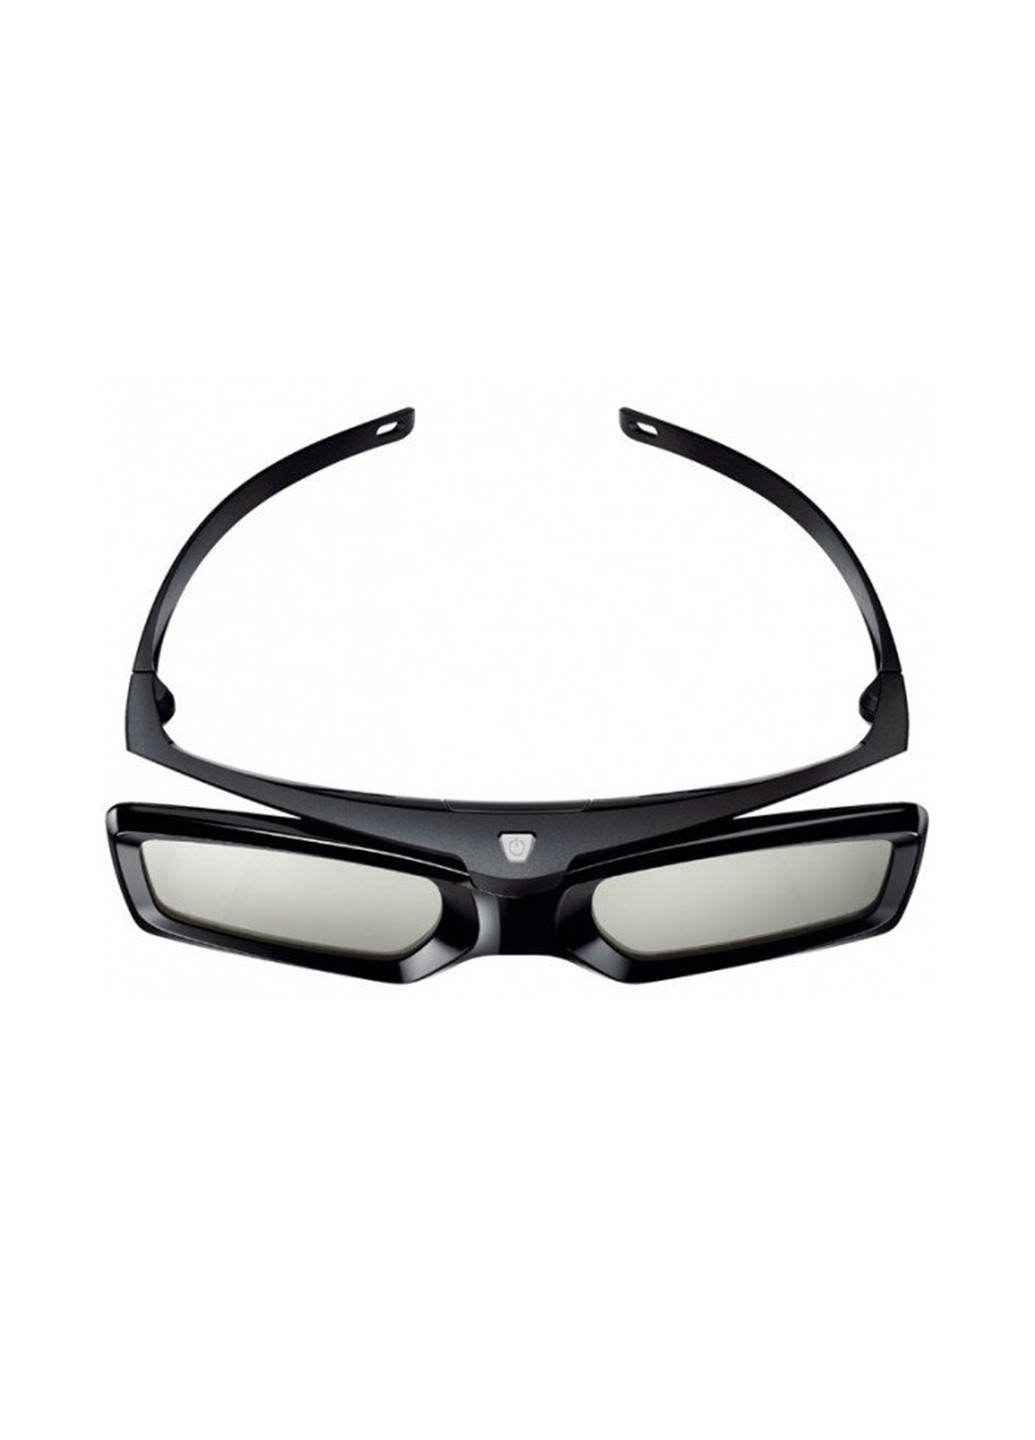 3D очки TDG-BT500A Sony TDGBT500A чёрные